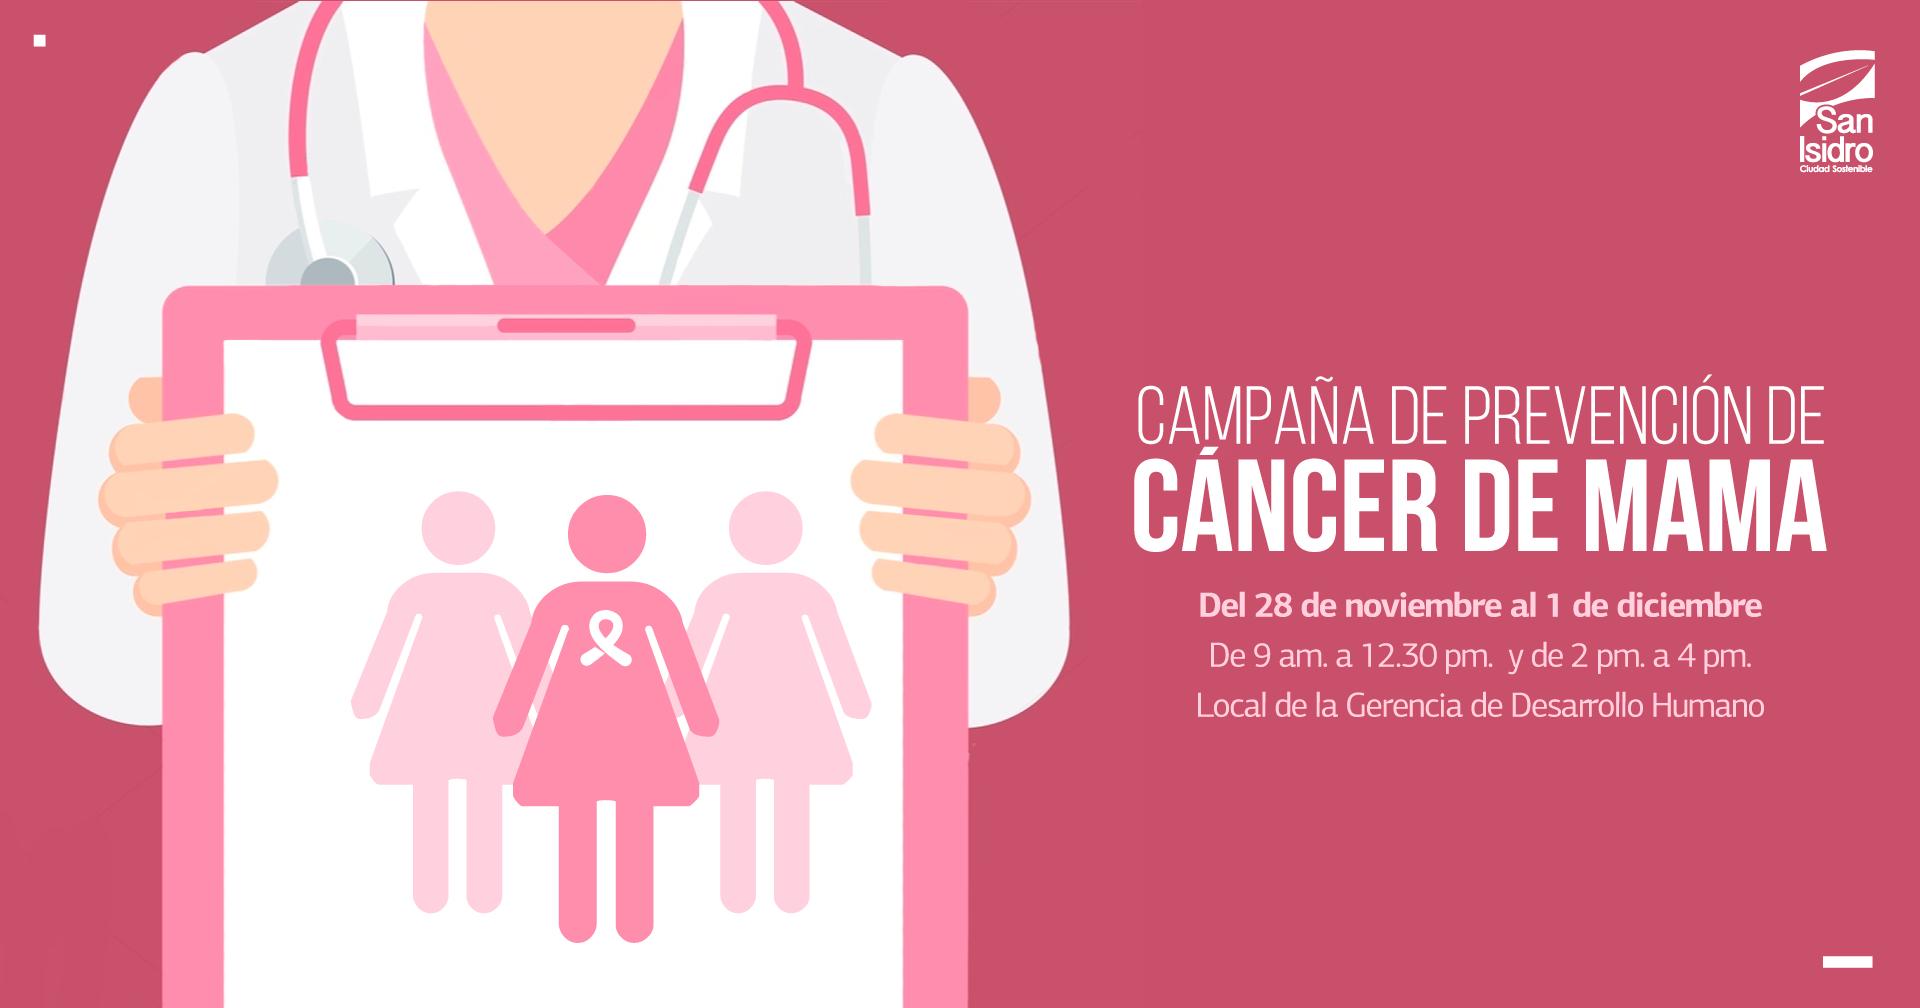 Campaña de prevención de cáncer de mama